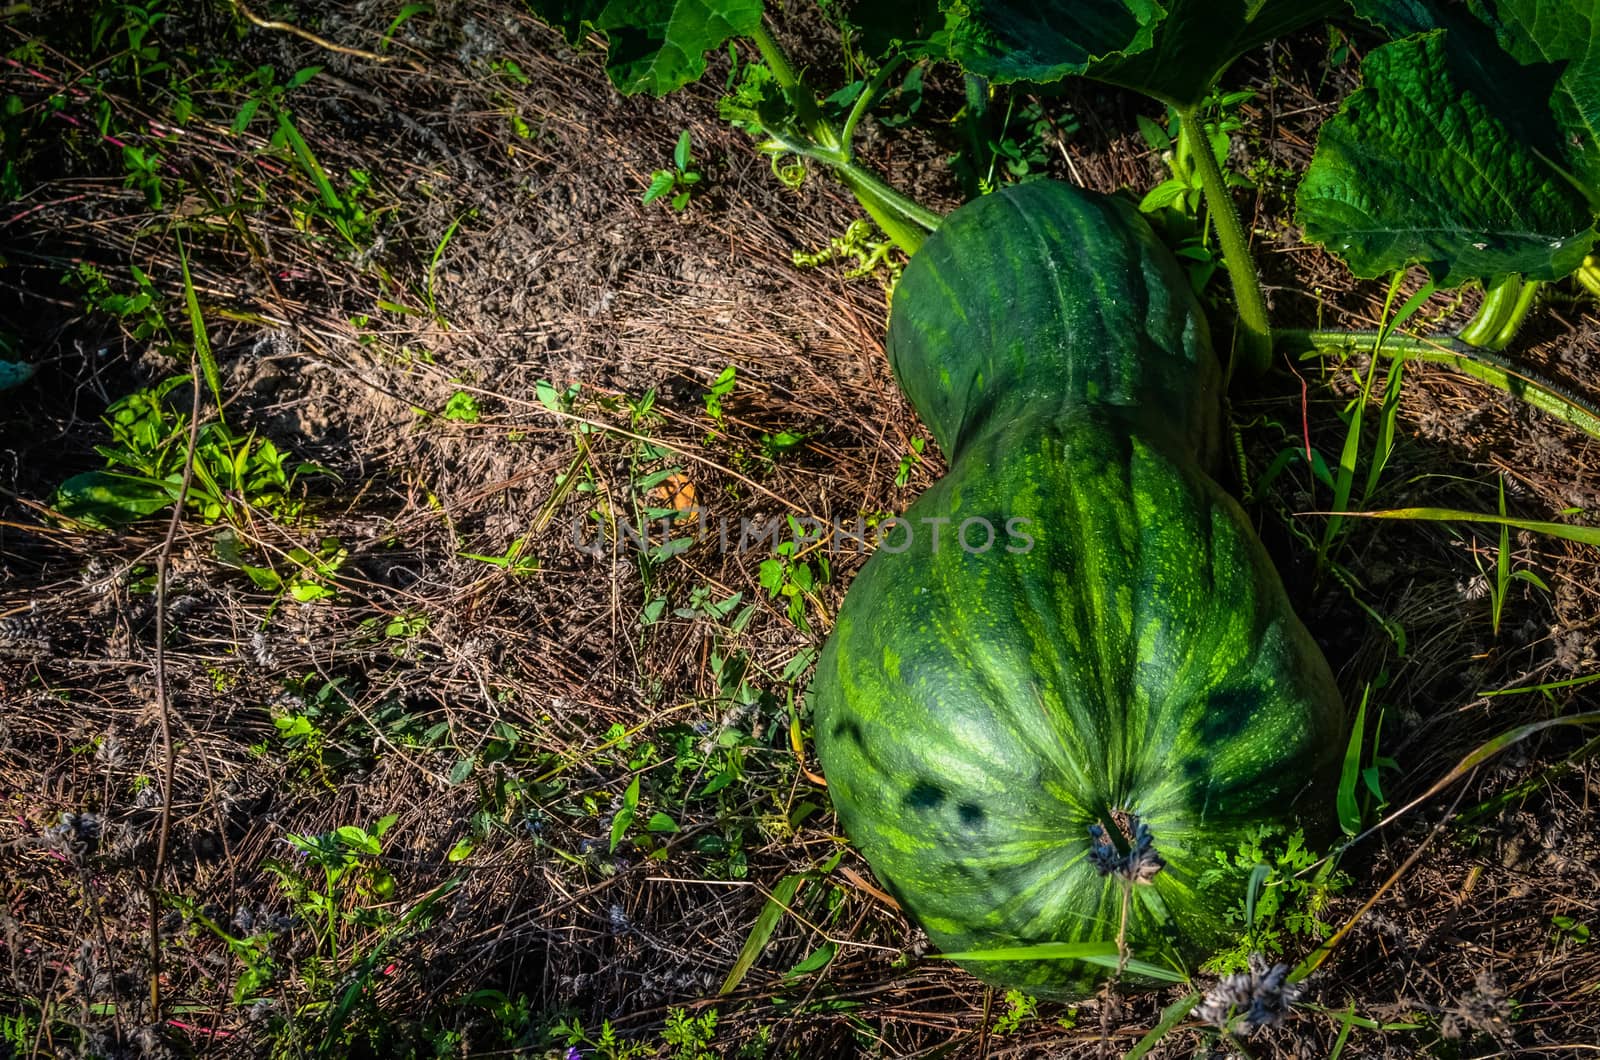 Latouche's Frog, Kuatun Rana latouchii butternut green pumpkin in the garden at sunny day